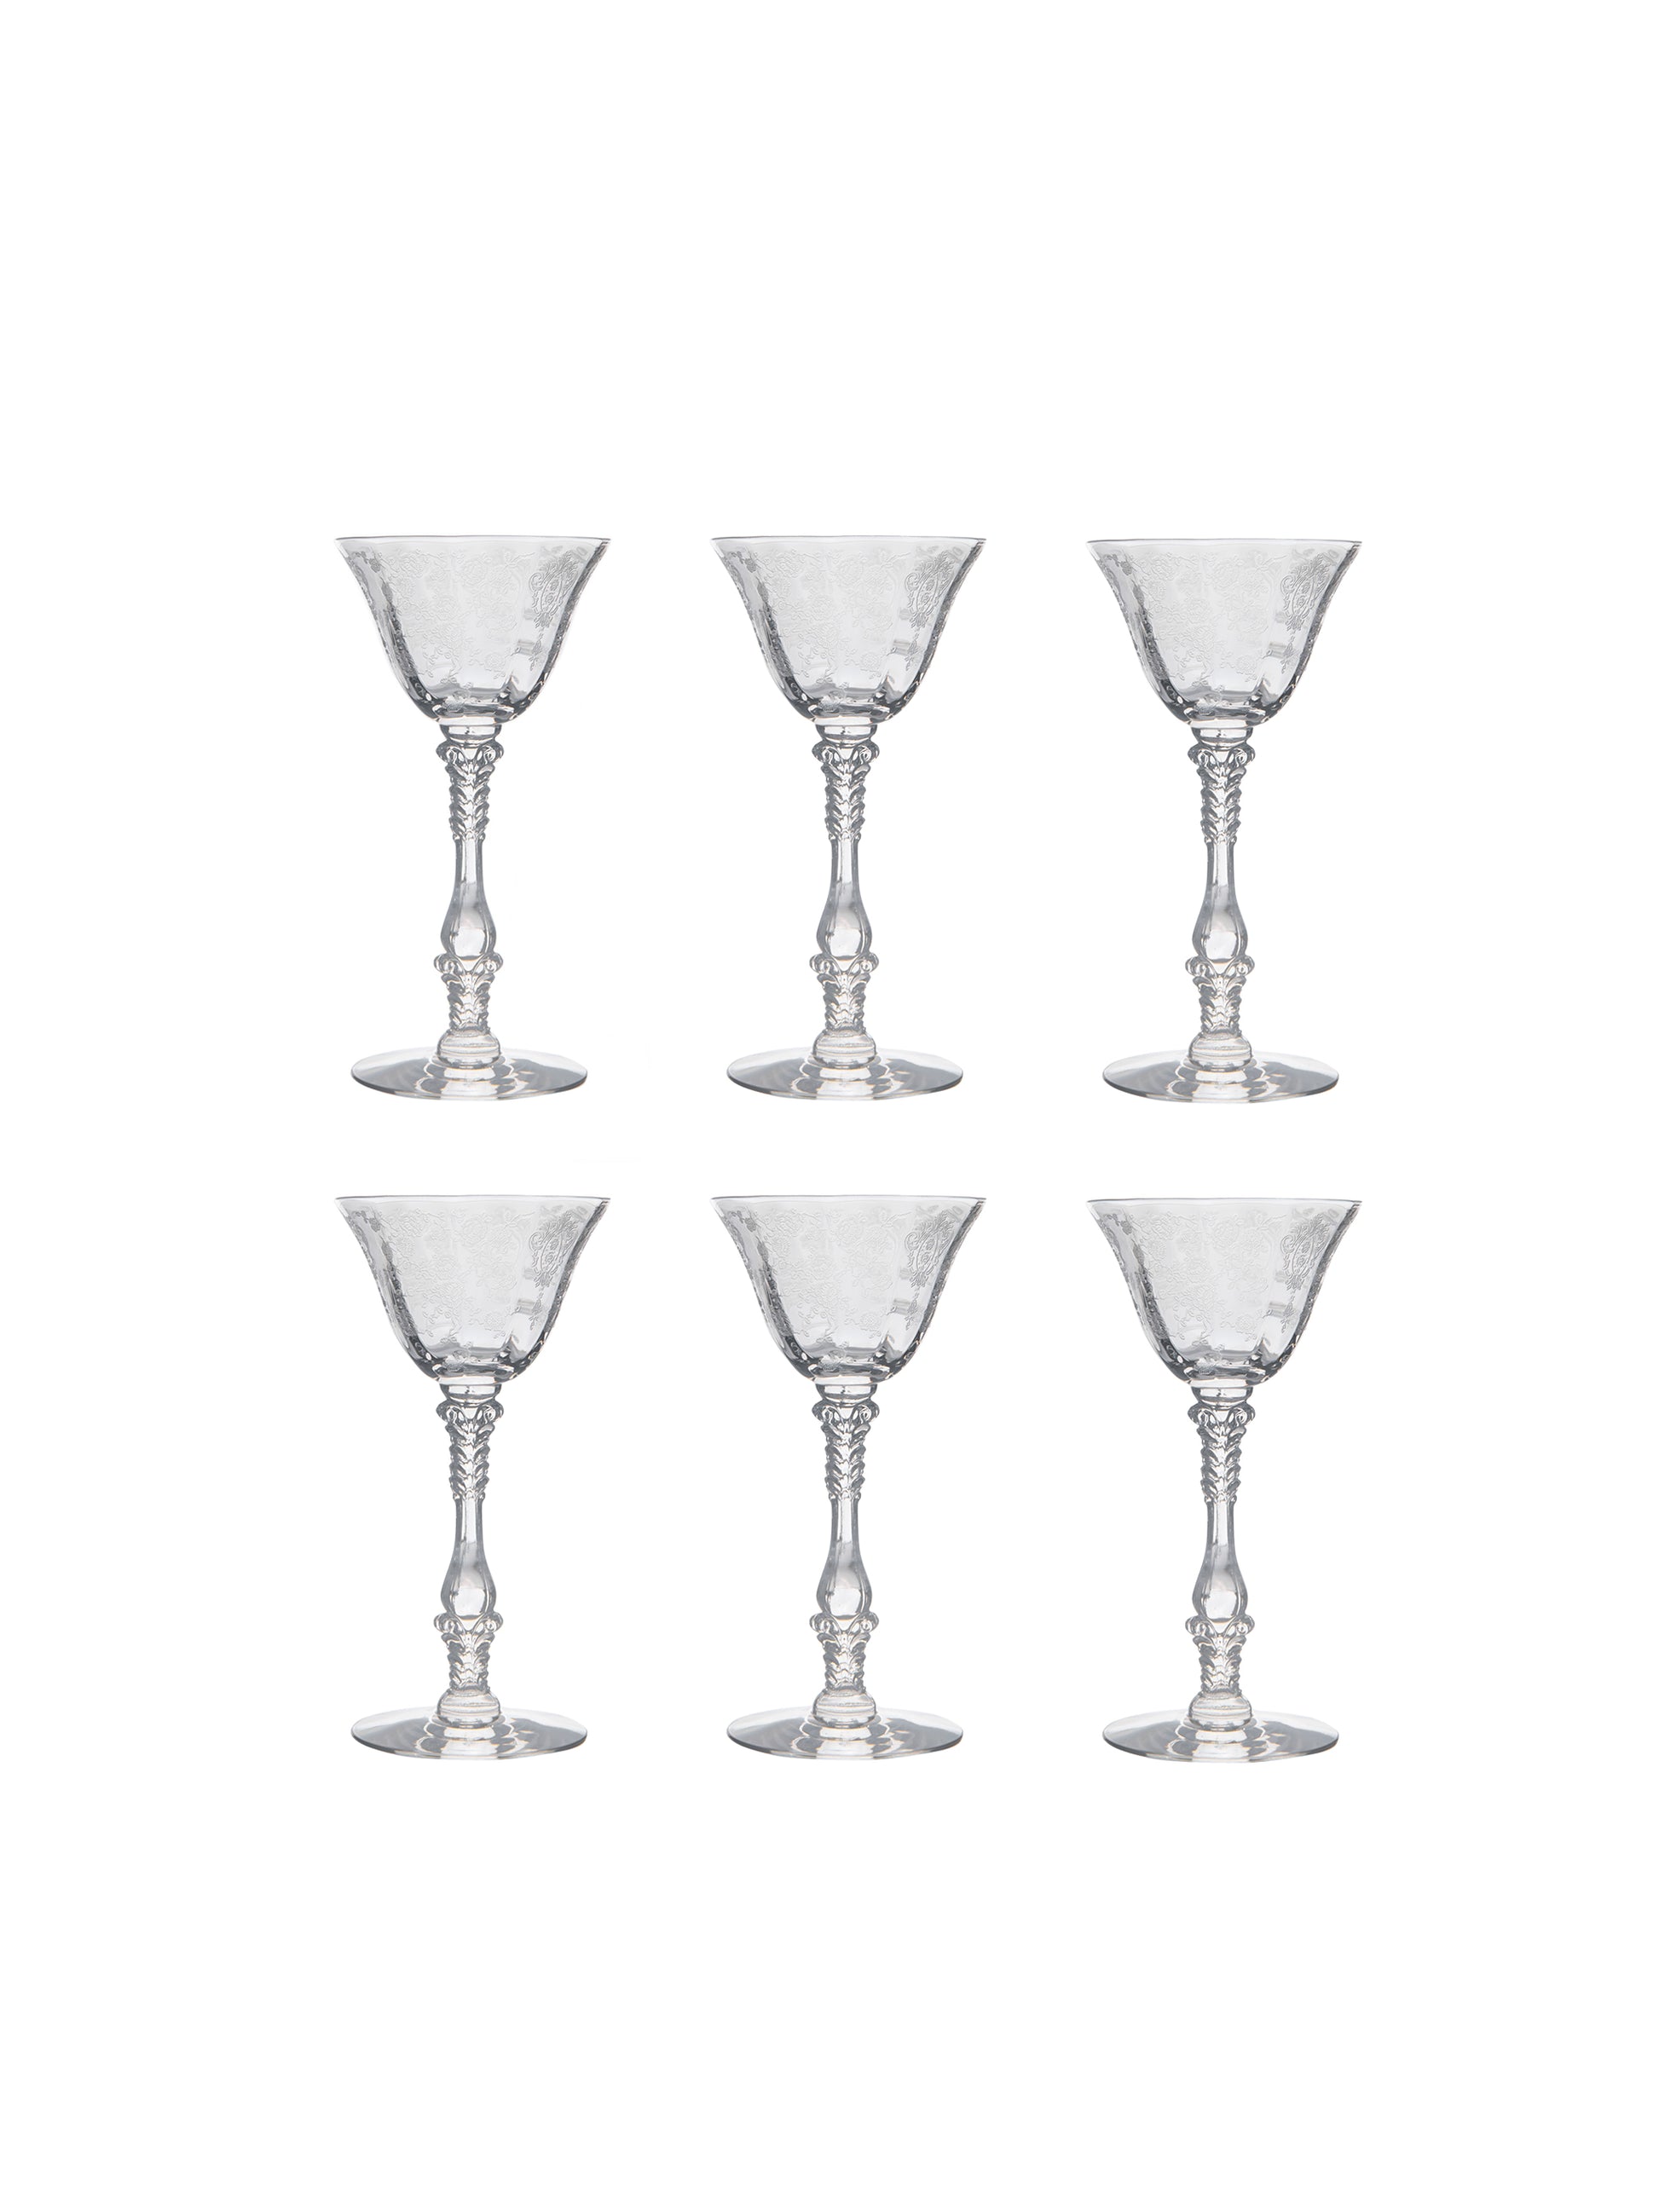 Vintage 1940s Rose Point Cambridge Sherry Glasses Set of 6 Weston Table